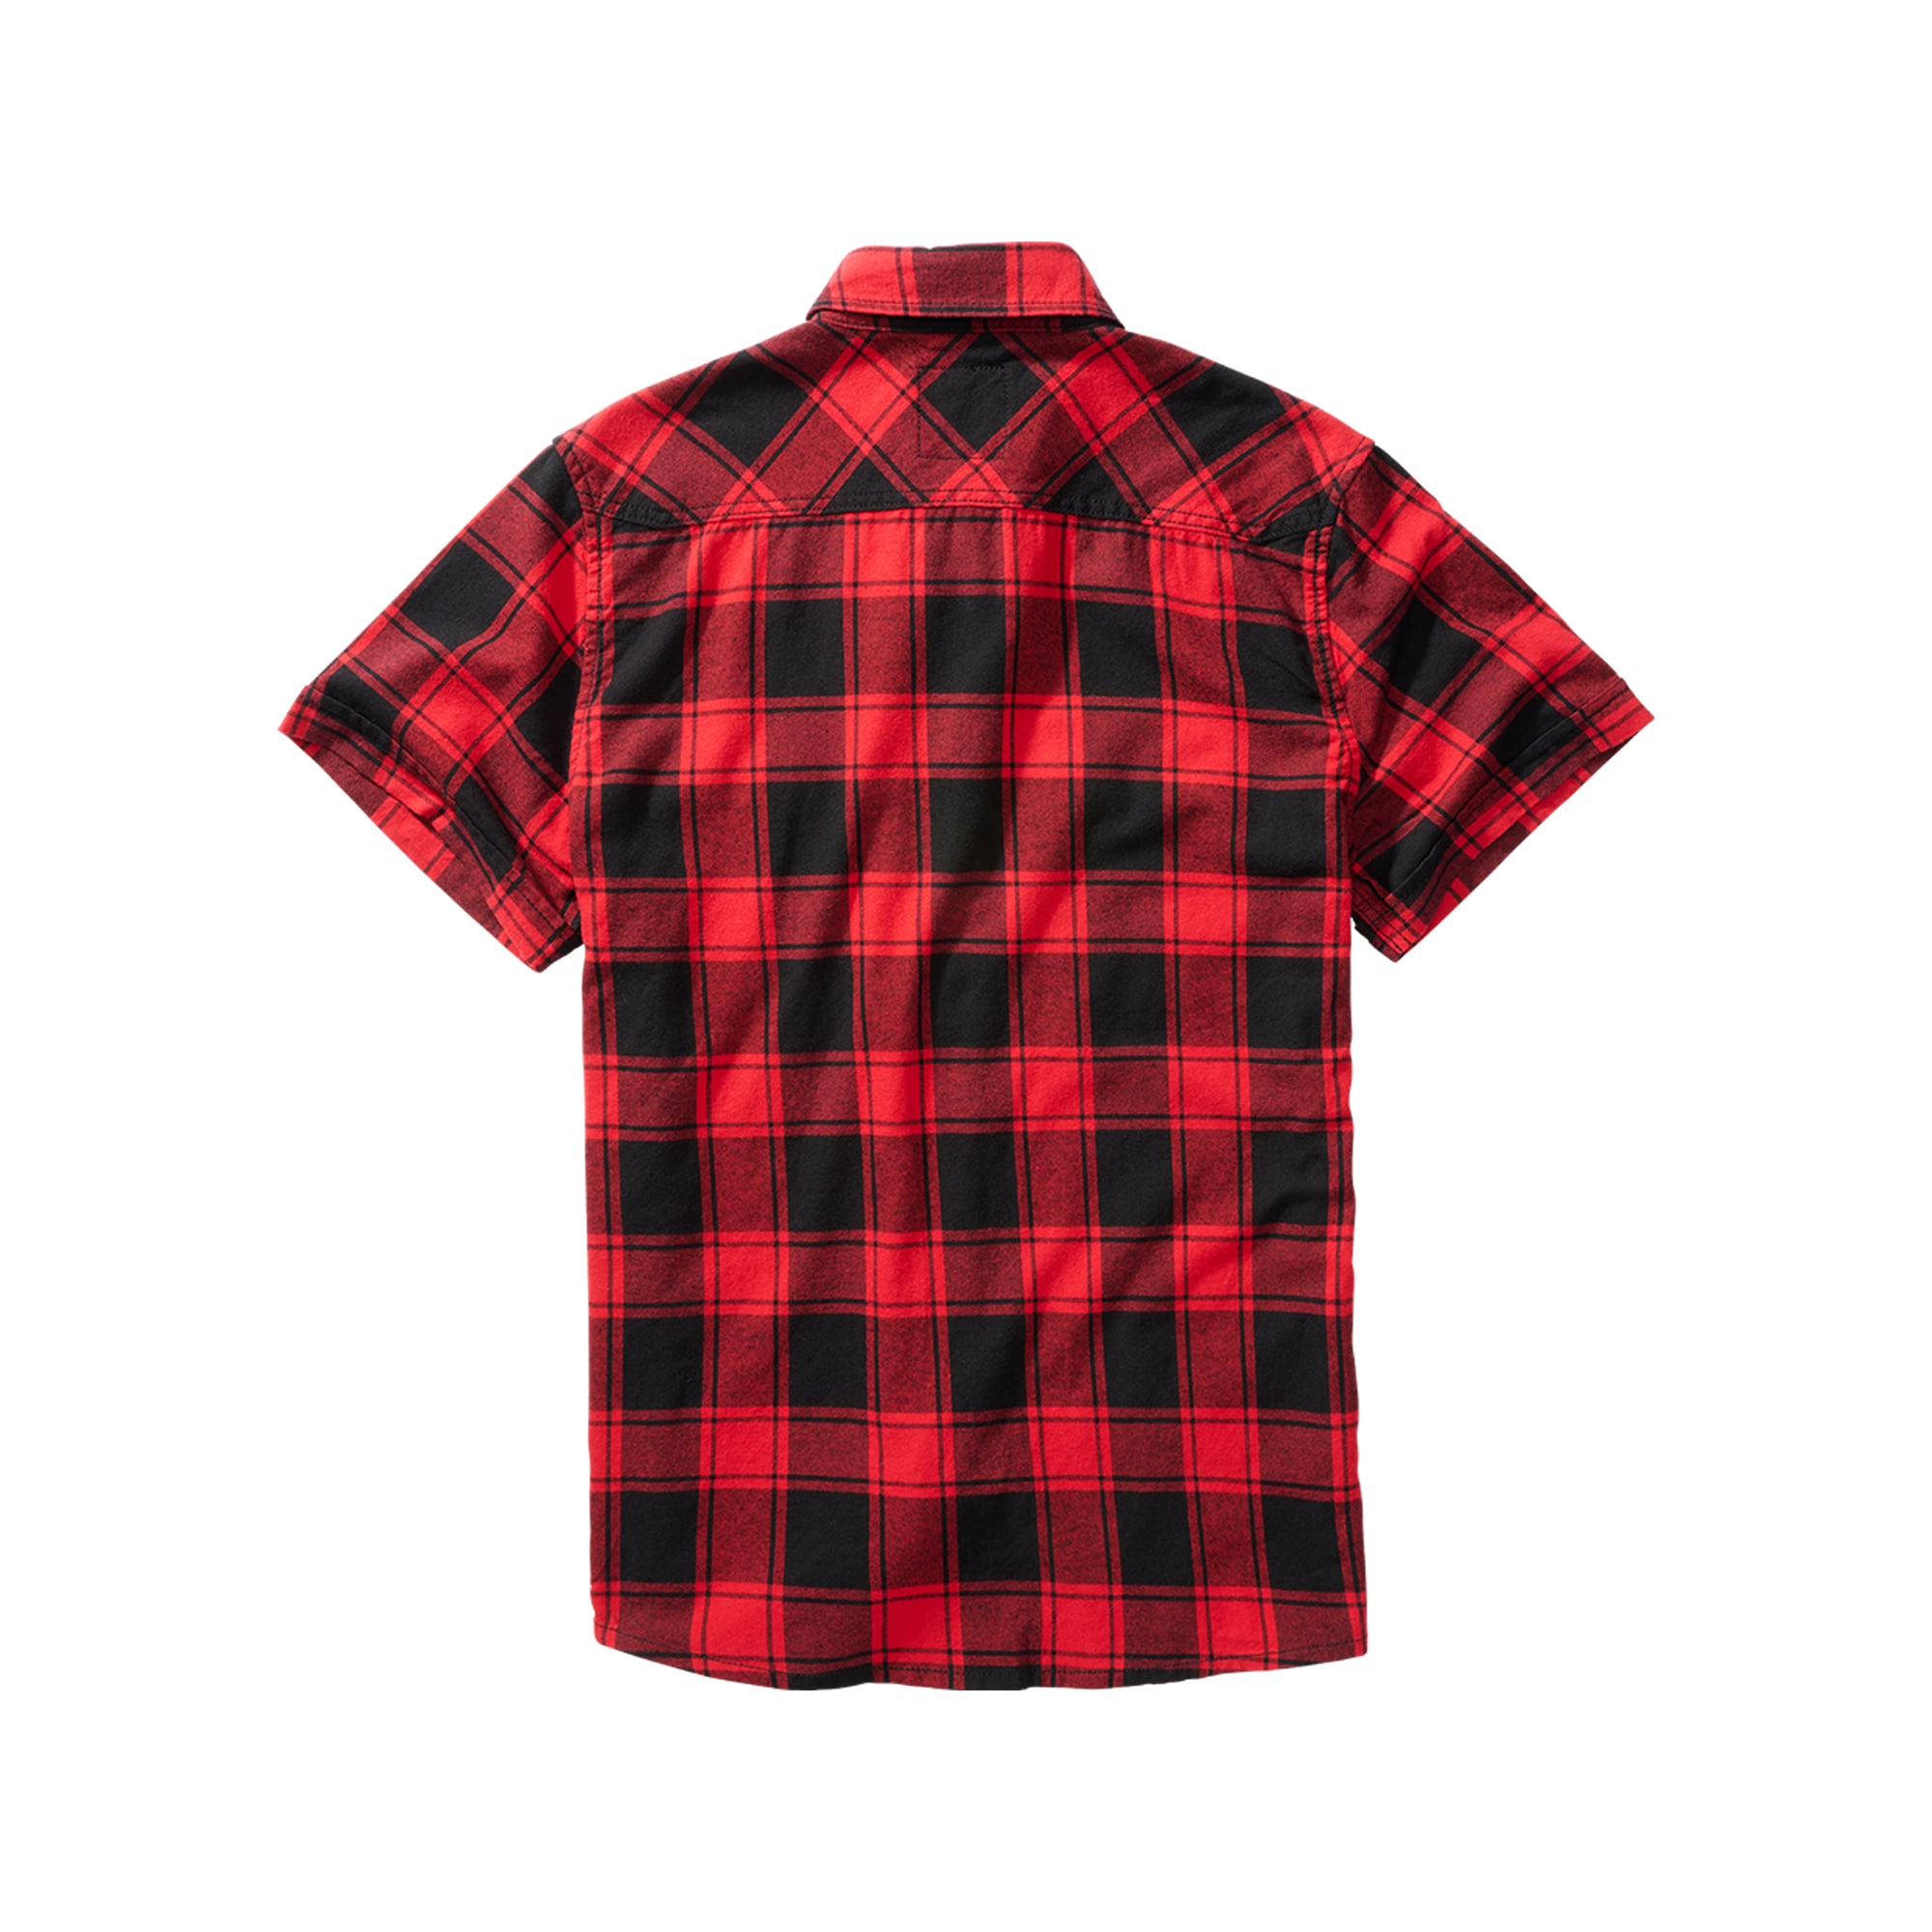 Purchase the Brandit Check by Half ASMC Shirt Sleeve red/black